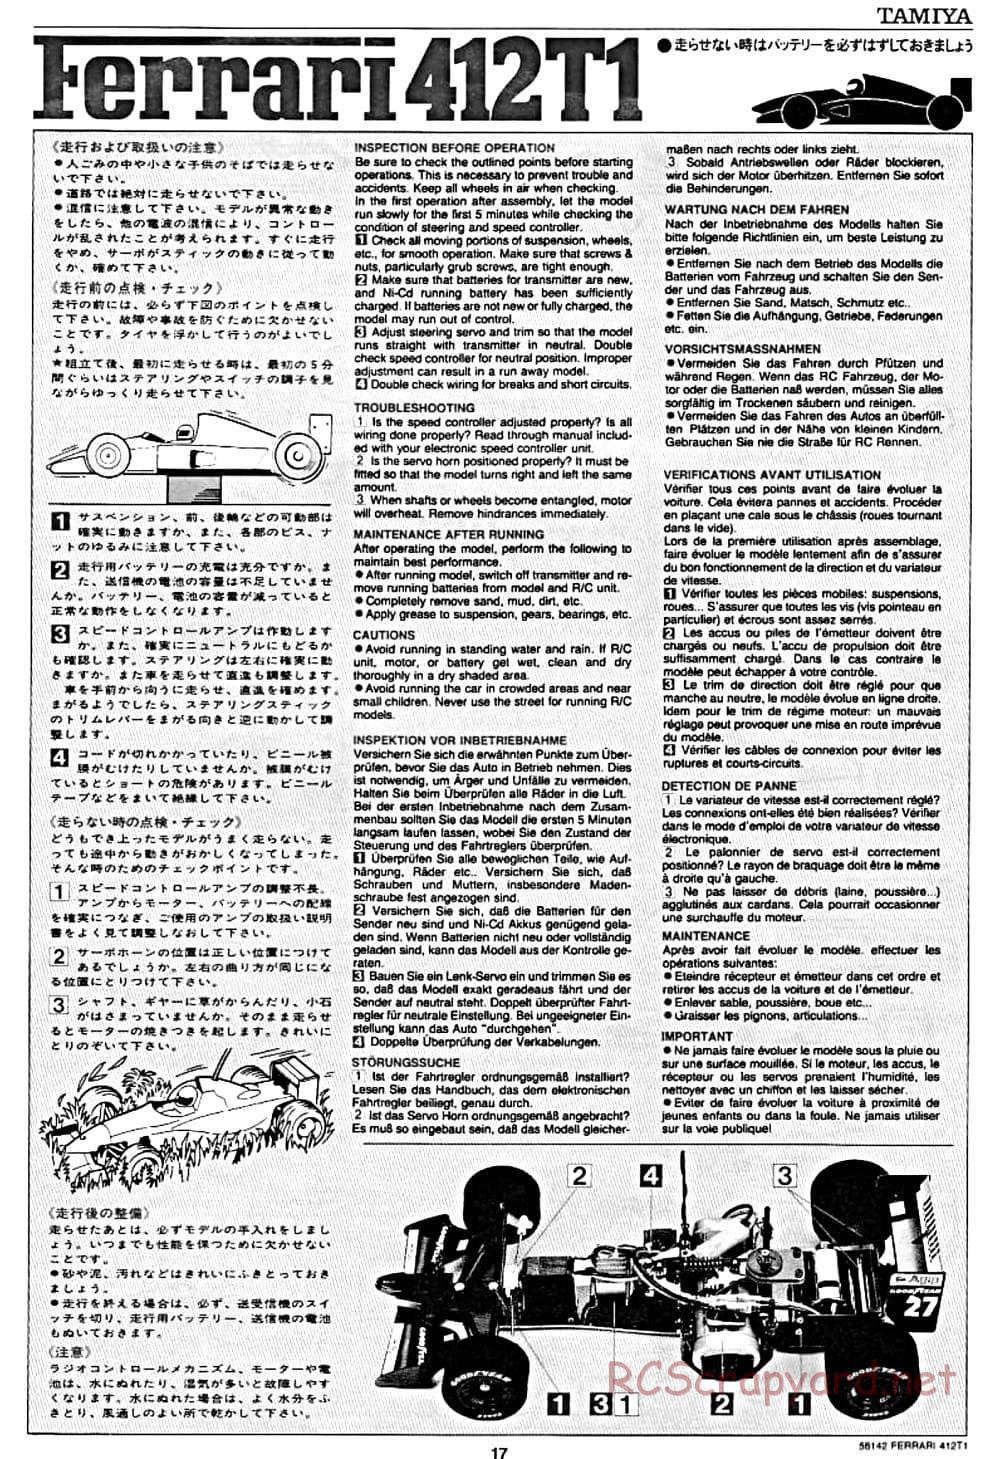 Tamiya - Ferrari 412T1 - F103 Chassis - Manual - Page 17